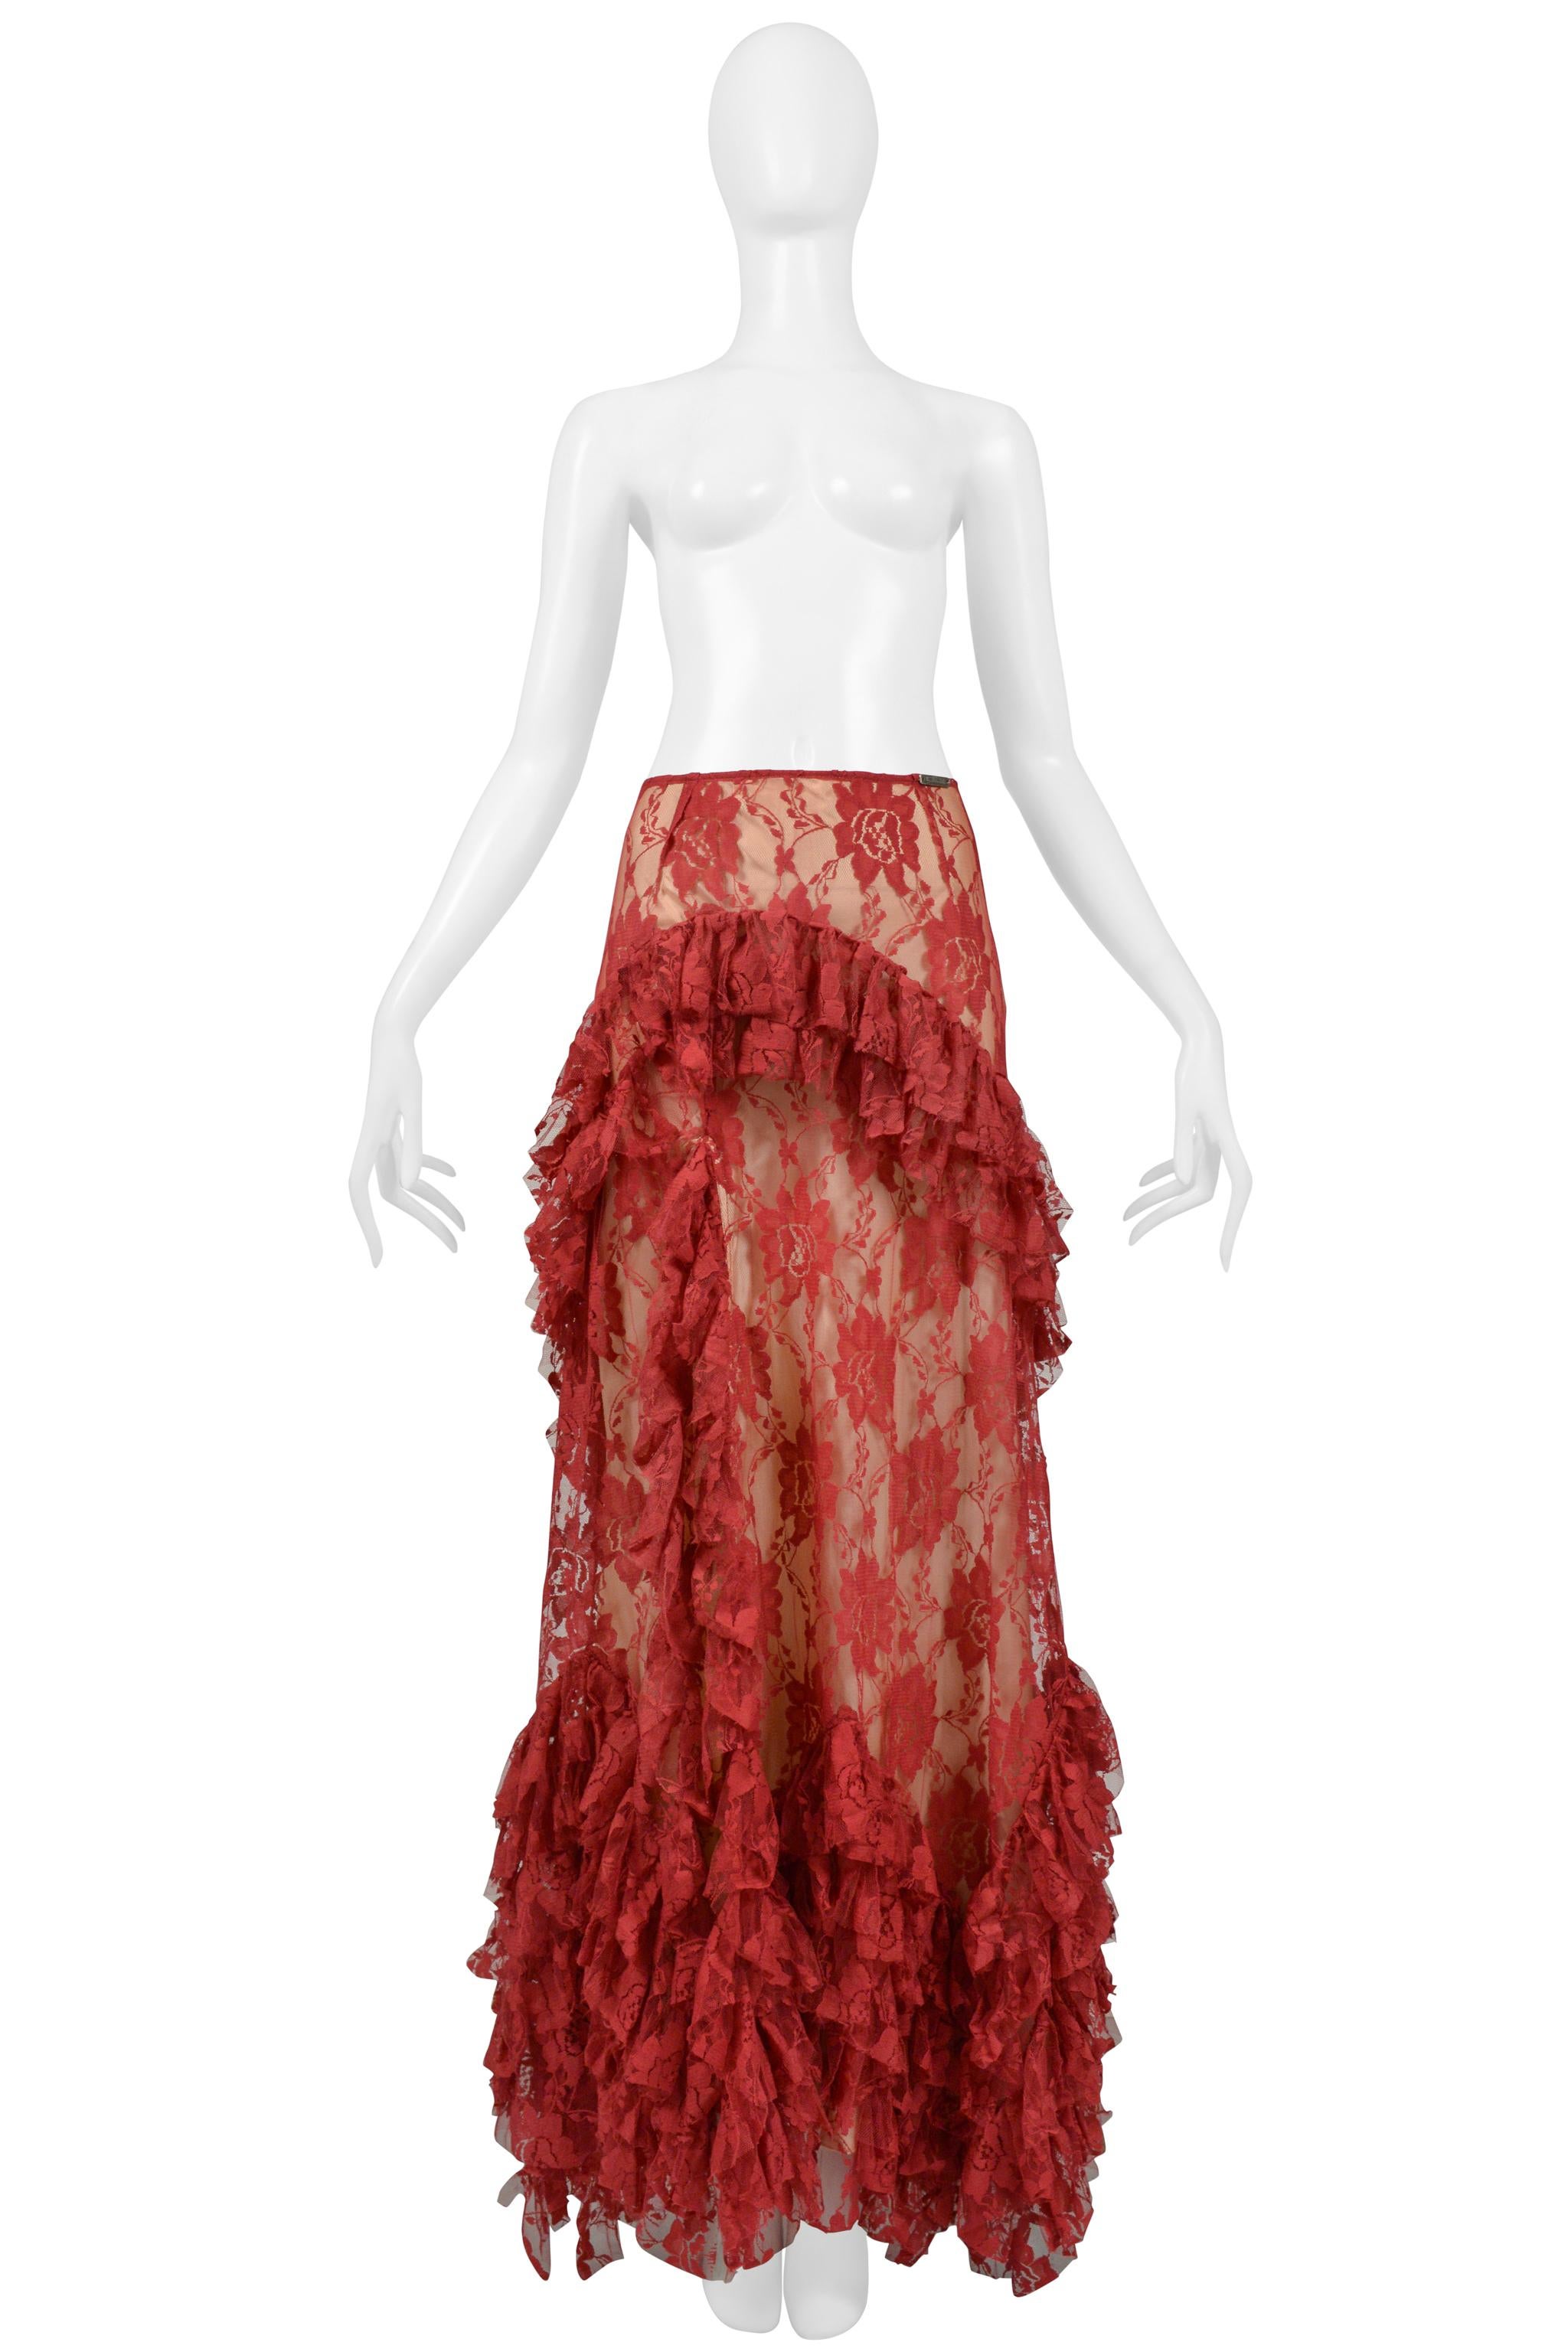 John Galliano Burgundy Lace Ballgown Skirt & Corset Top For Sale 2